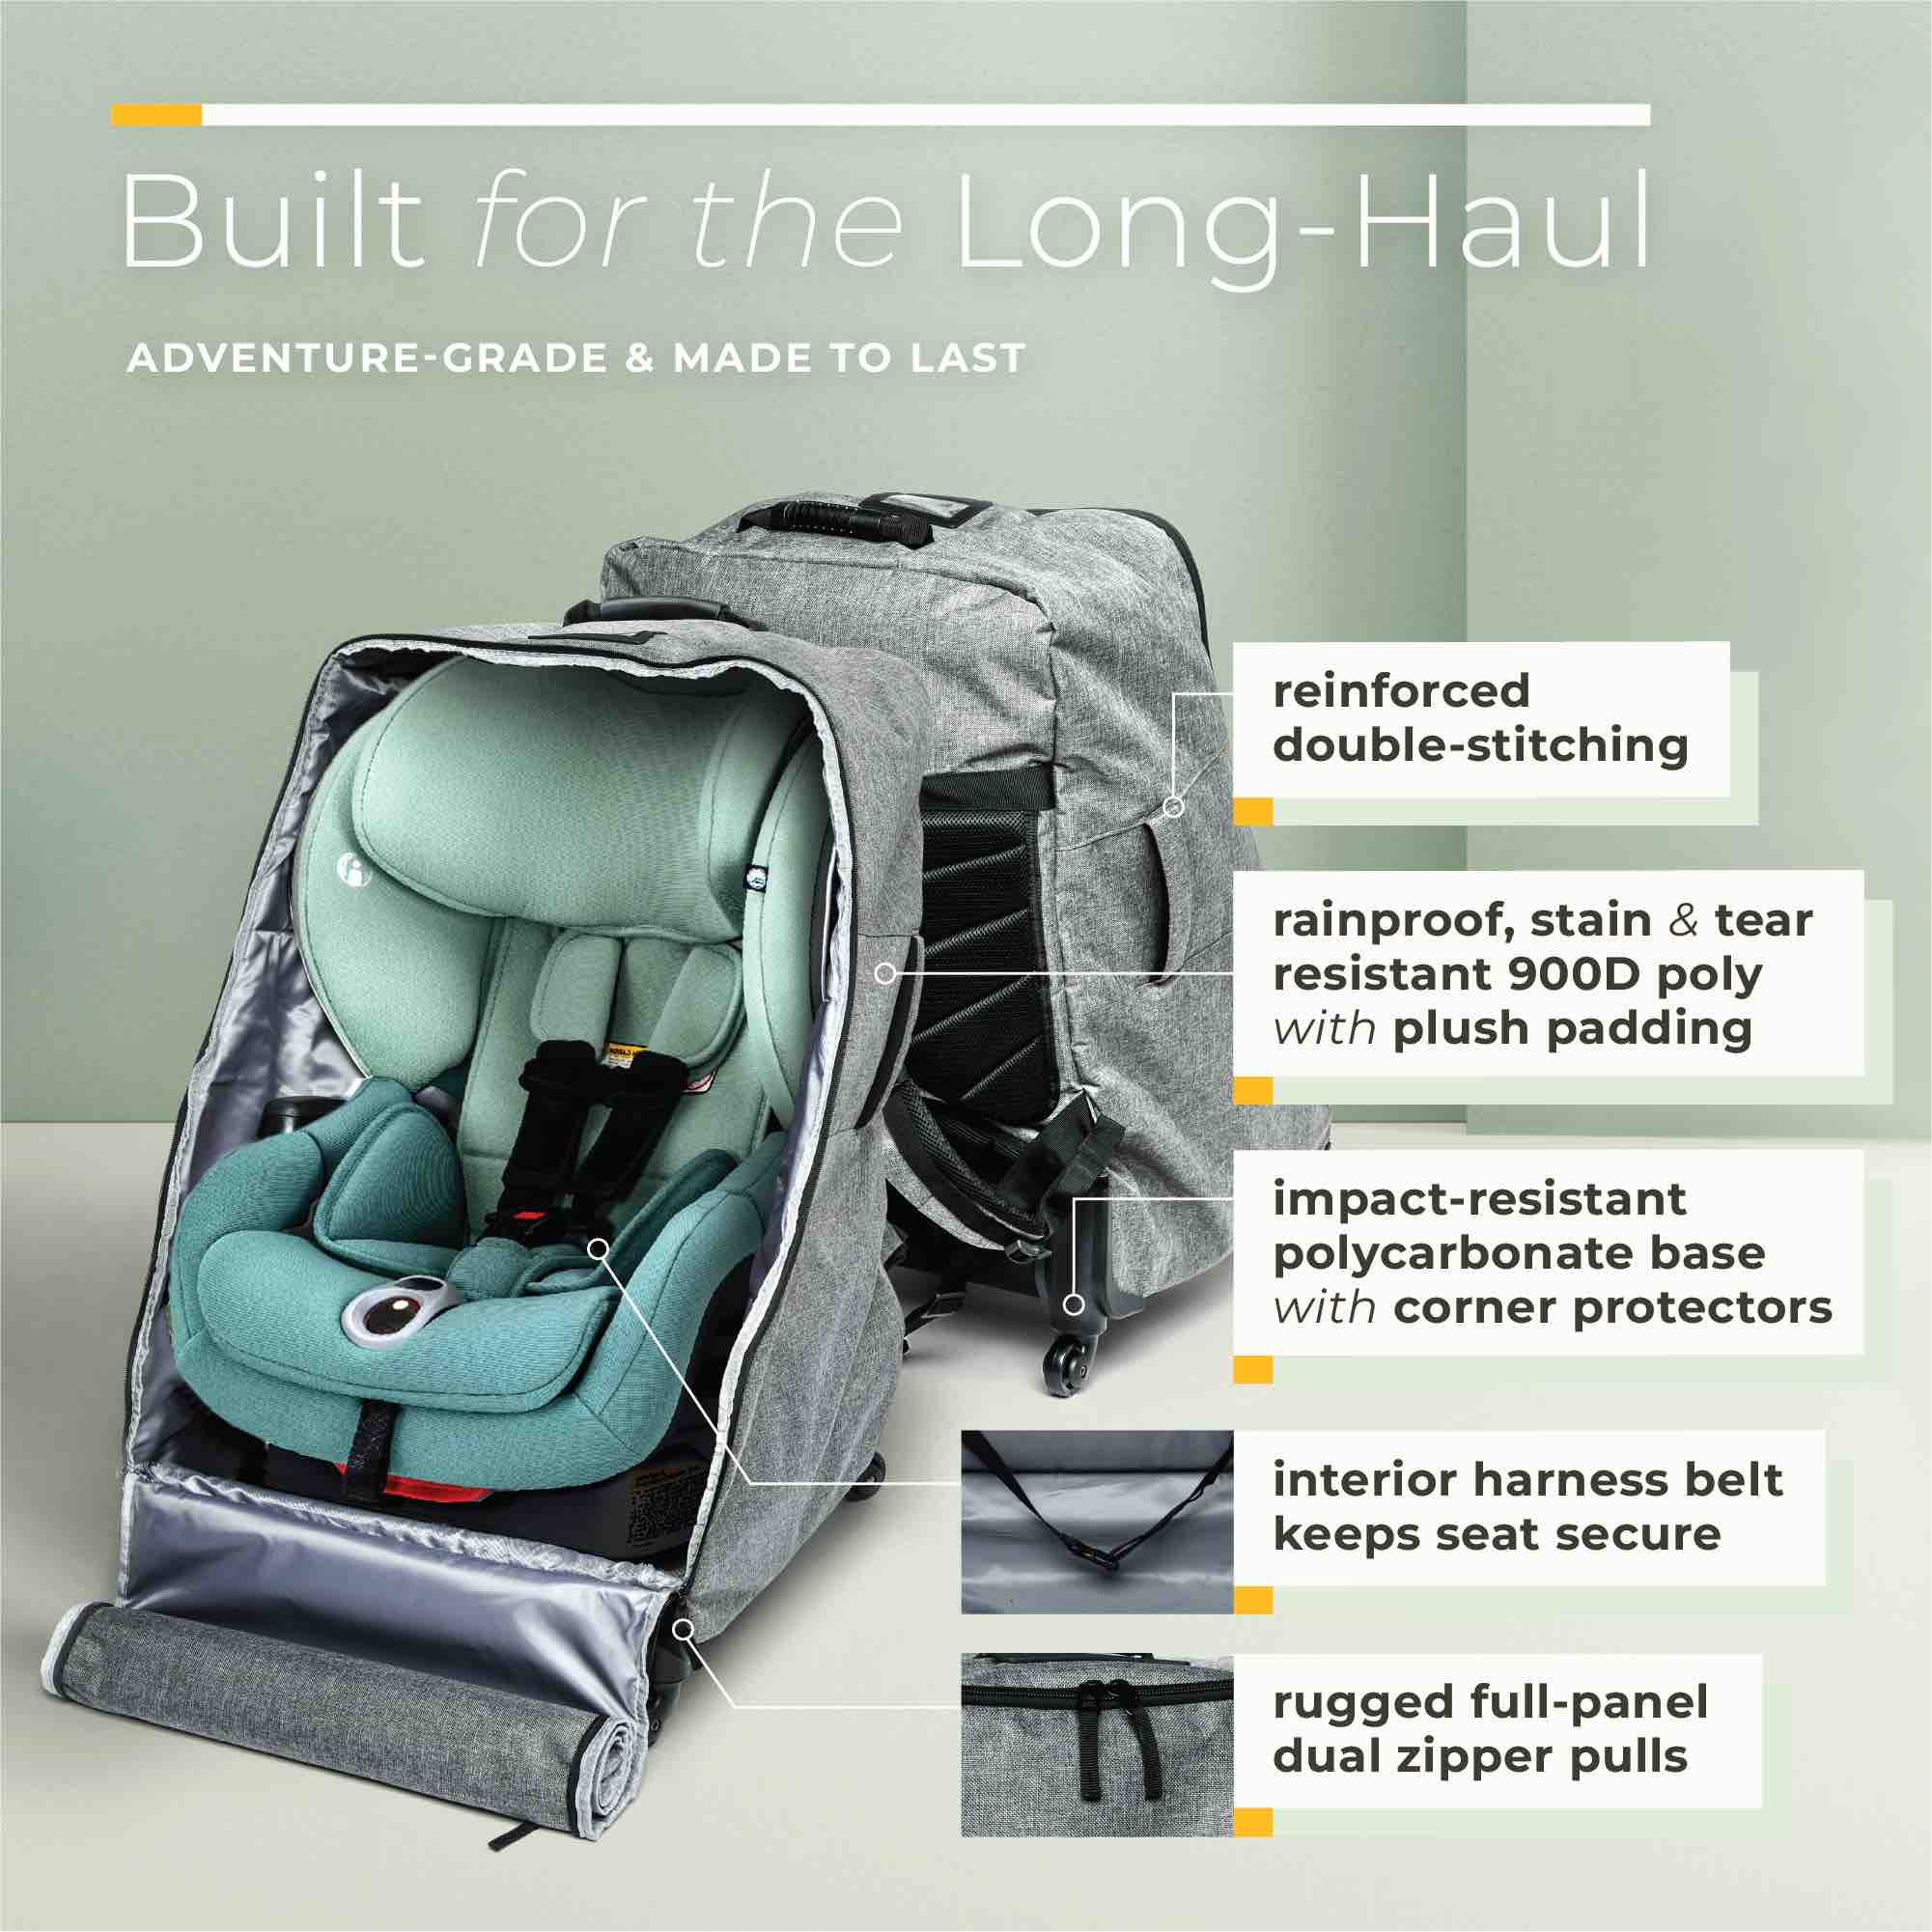 The Little Stork Car Seat Wheeled Padded Travel Backpack AerCas Bag,Gray 